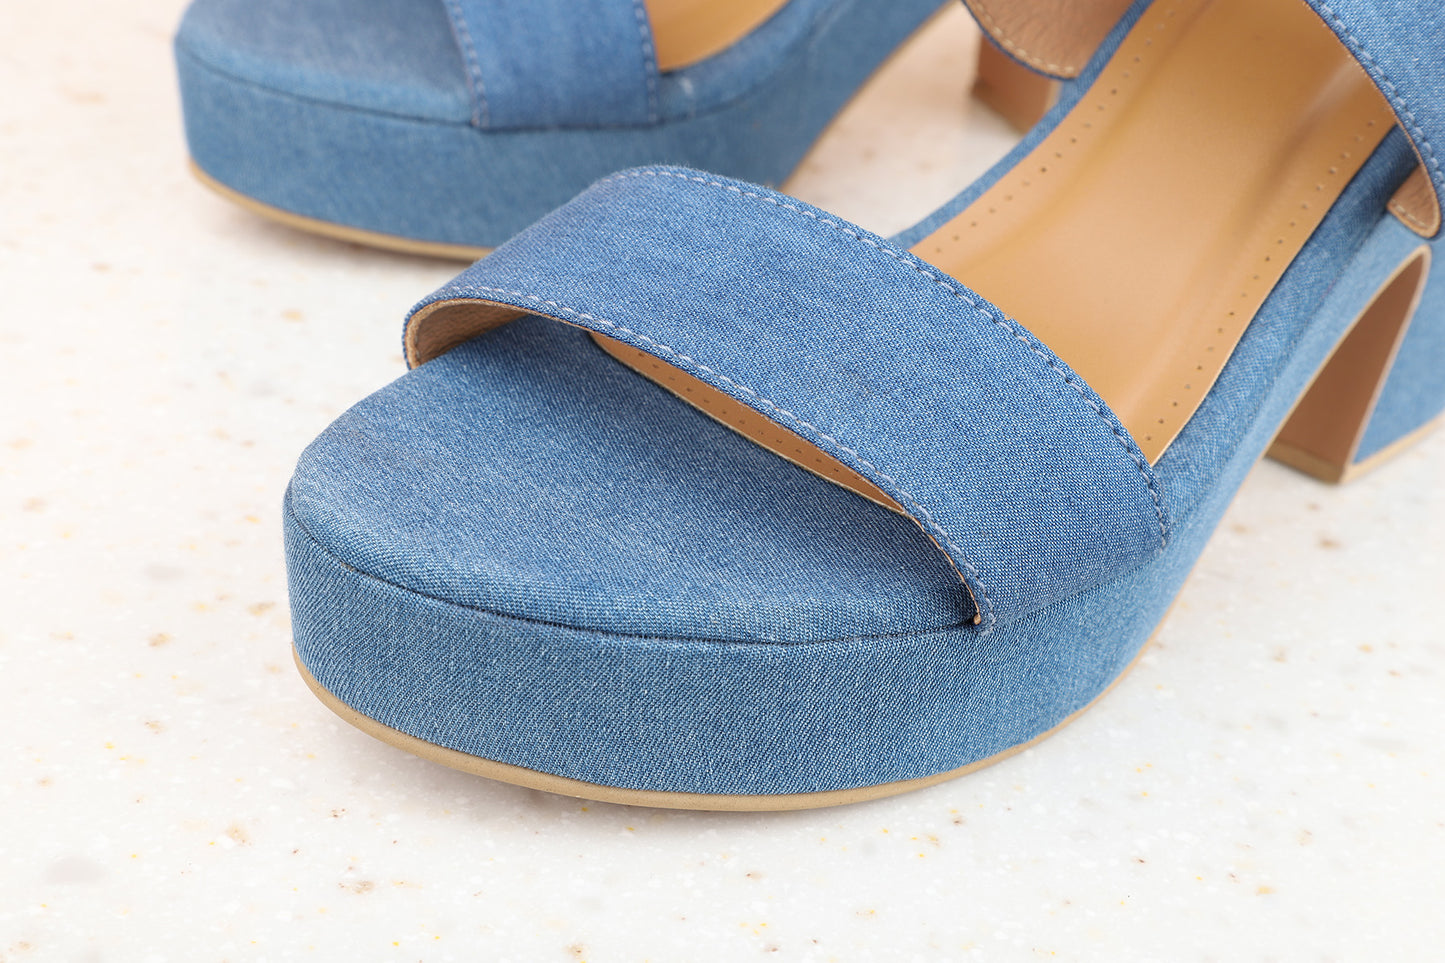 Women Blue Solid Platform Heels